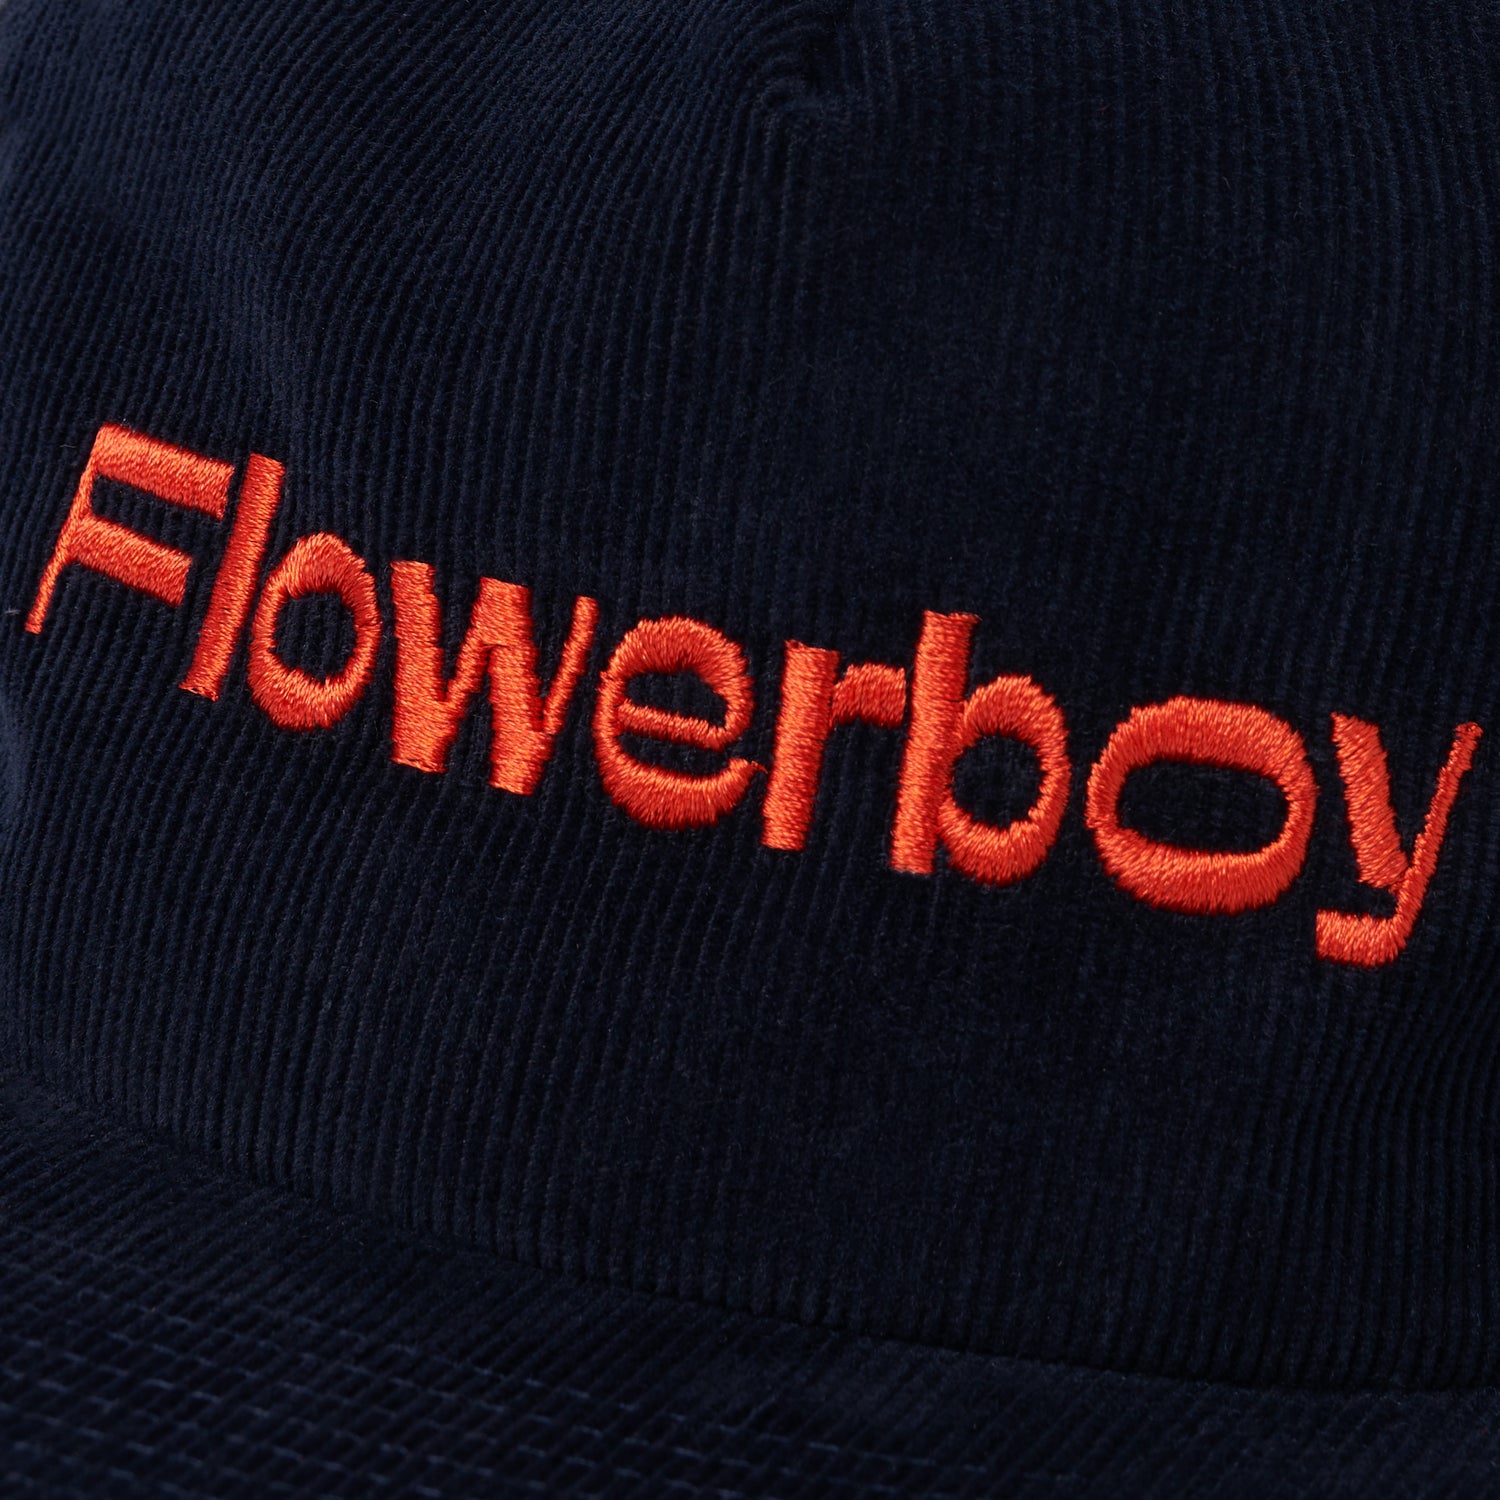 FLOWERBOY PROJECT EMBROIDERED LOGO DAD HAT NAVY & ORANGE - Front Detail